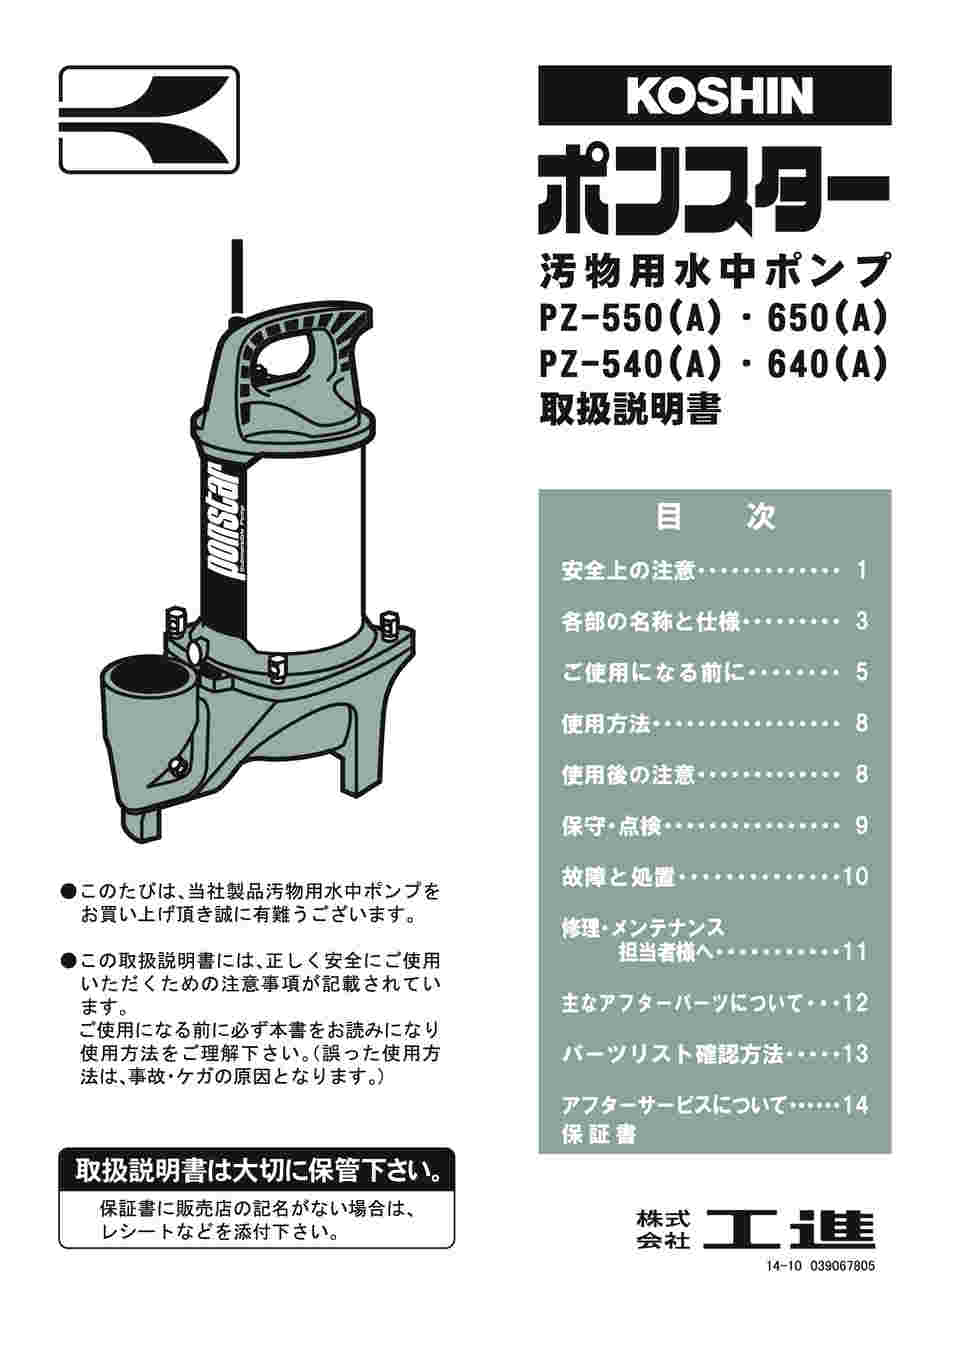 KOSHIN 汚物用水中ポンプ ポンスター 口径40ミリ 60HZ 自動運転型 PZ-640A PZ640A ▽0398626(株)工進 ○ko591 